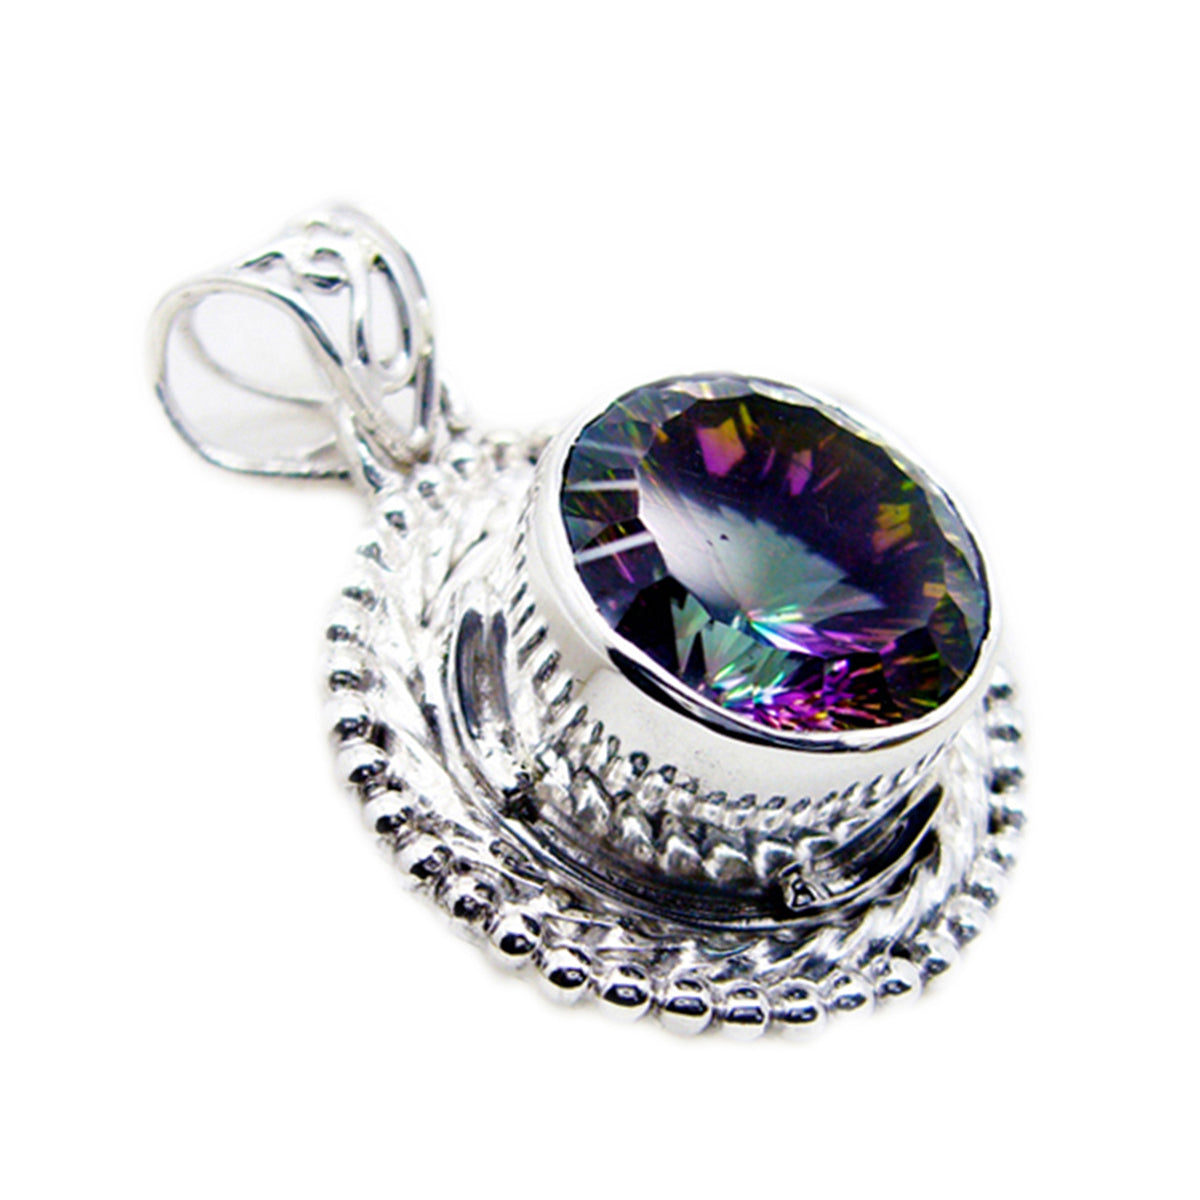 Riyo Drop Gemstone Round Faceted Multi Color Mystic Quartz 1180 Sterling Silver Pendant Gift For Girlfriend